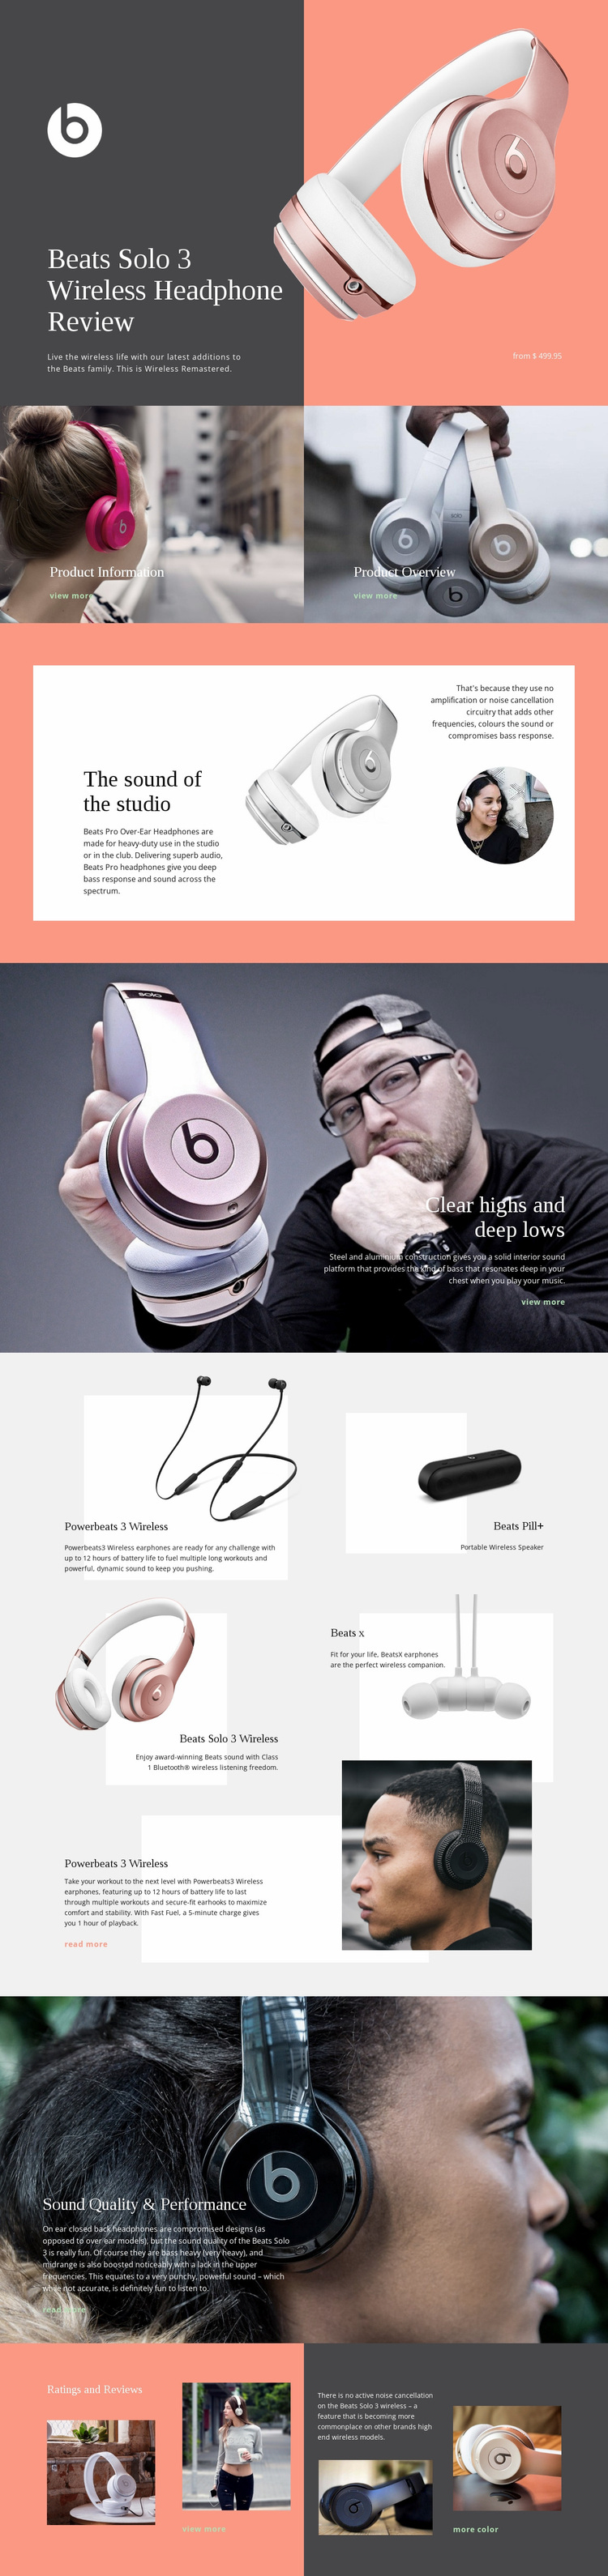 Beats Wireless Website Design